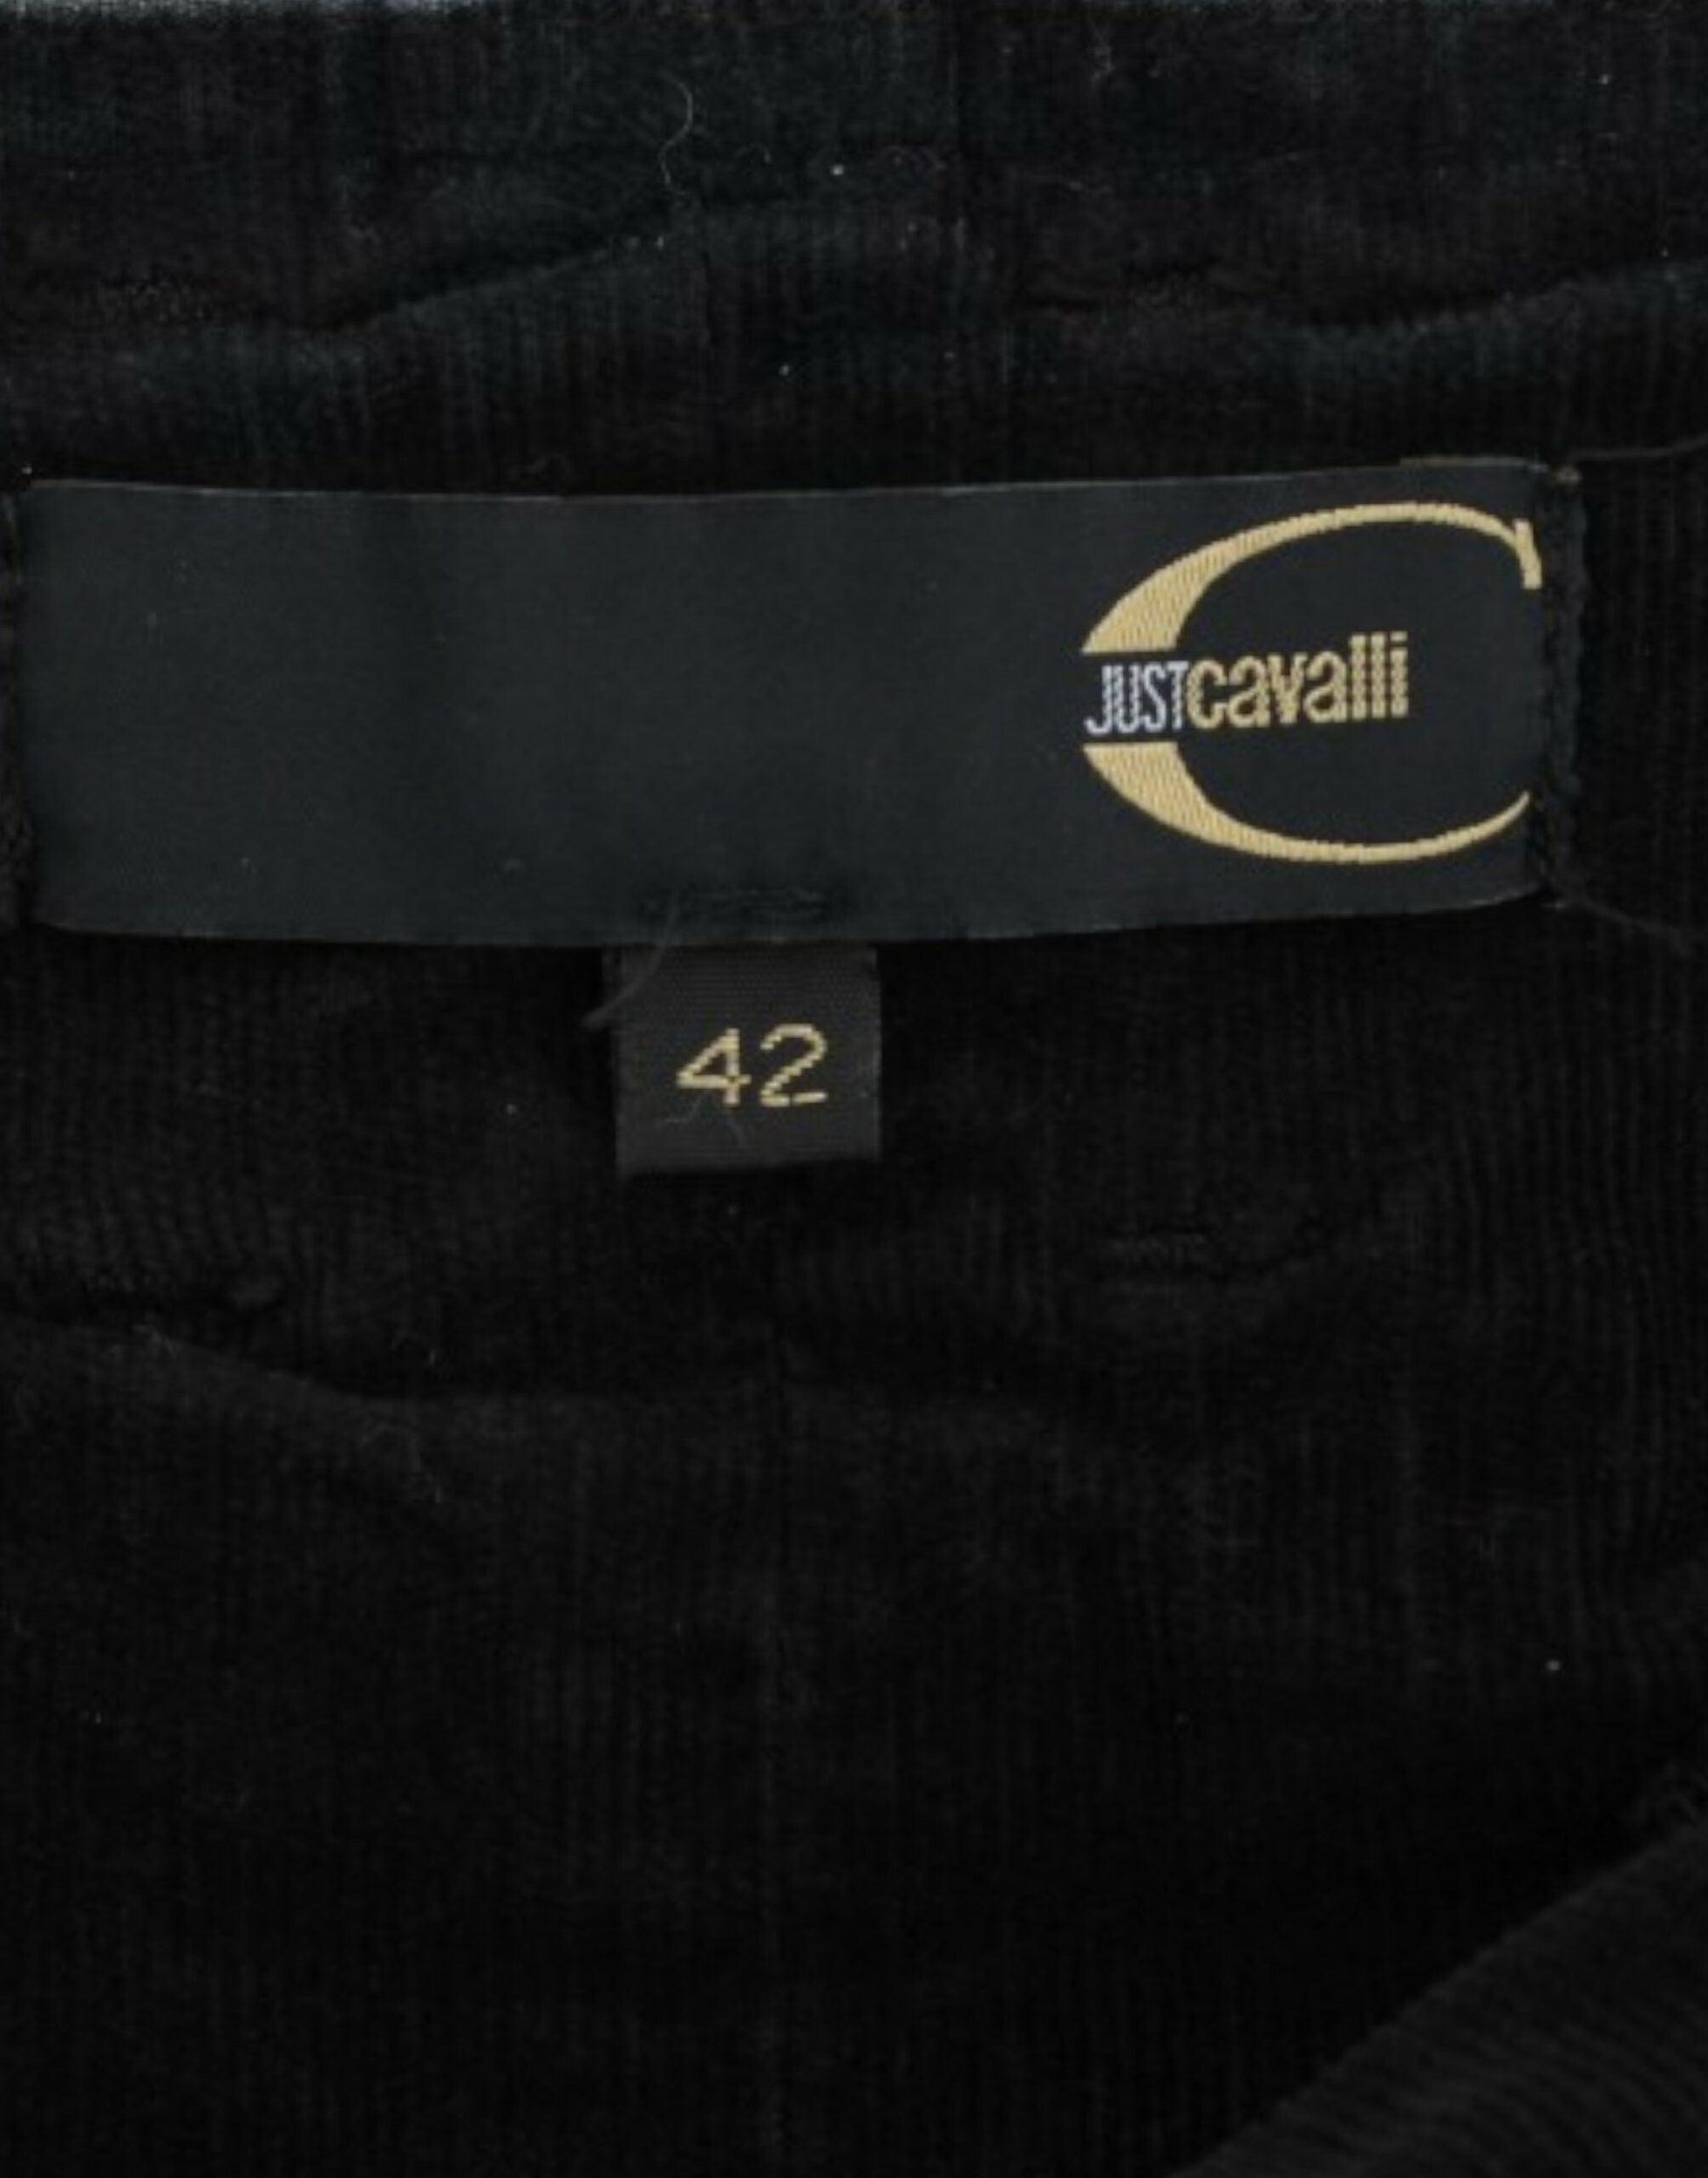 Cavalli Elegant Black Pencil Skirt for Sophisticated Style - PER.FASHION